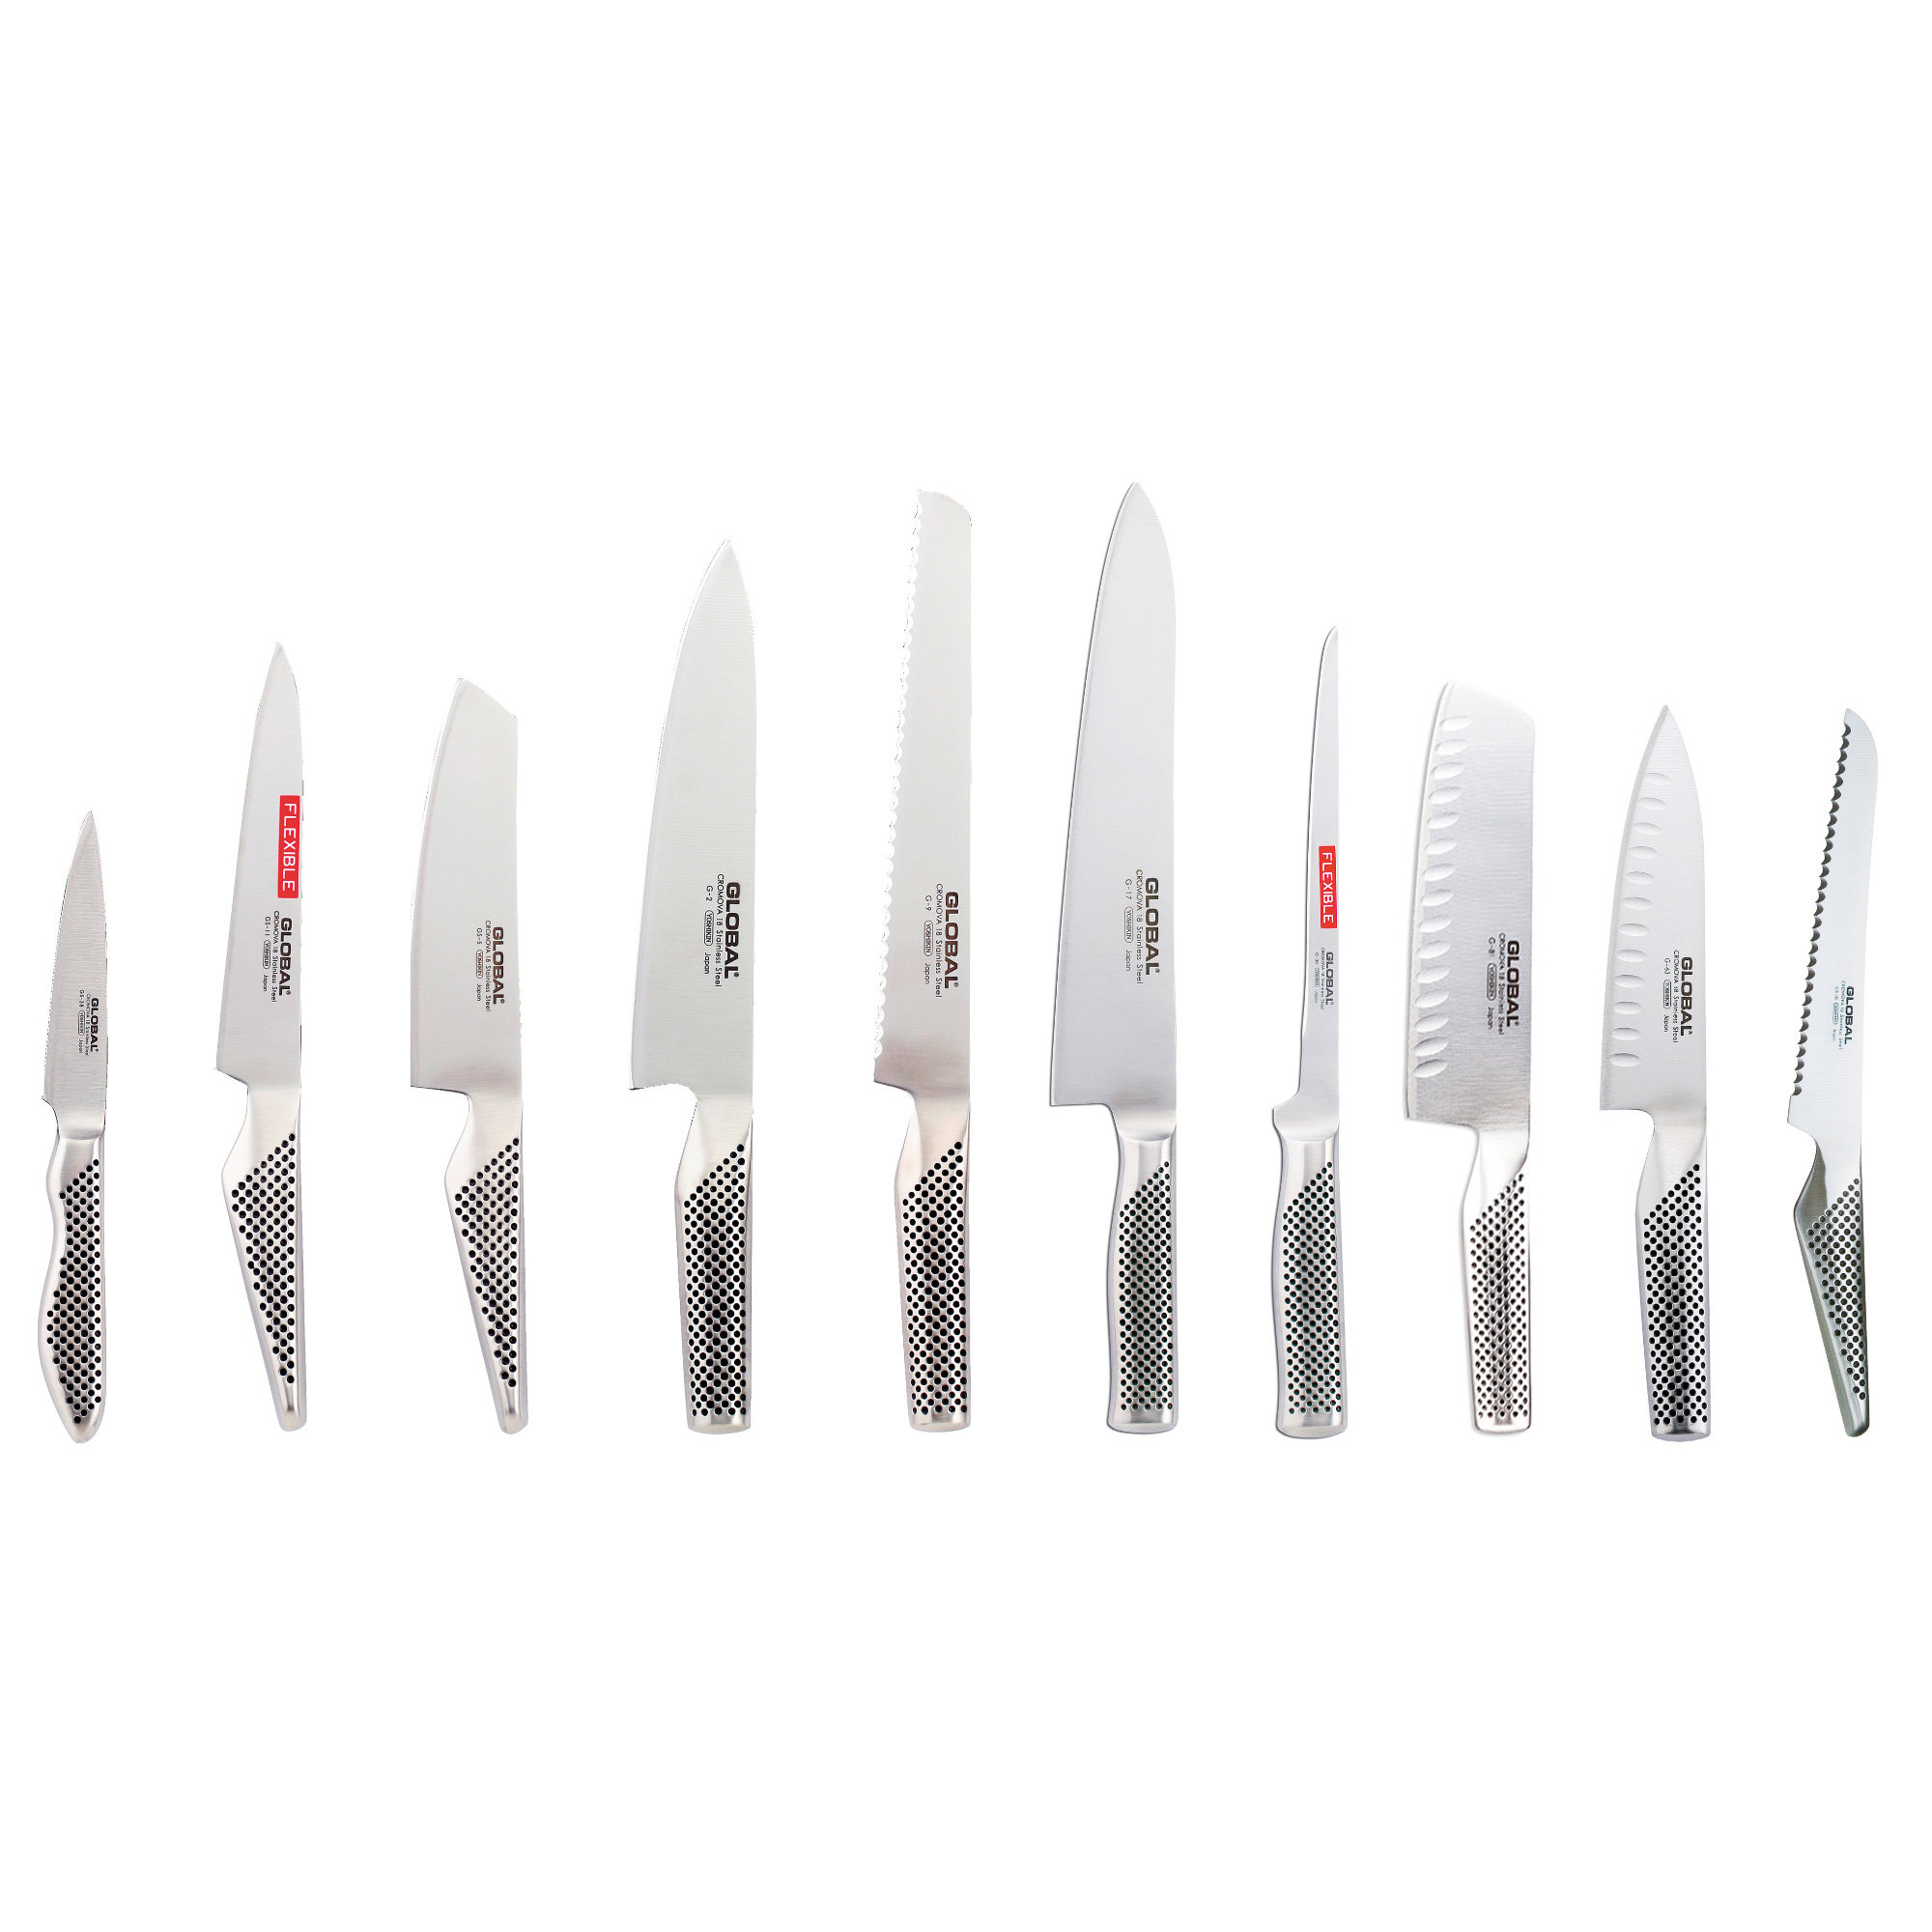 Global Knivsæt med 10 knive